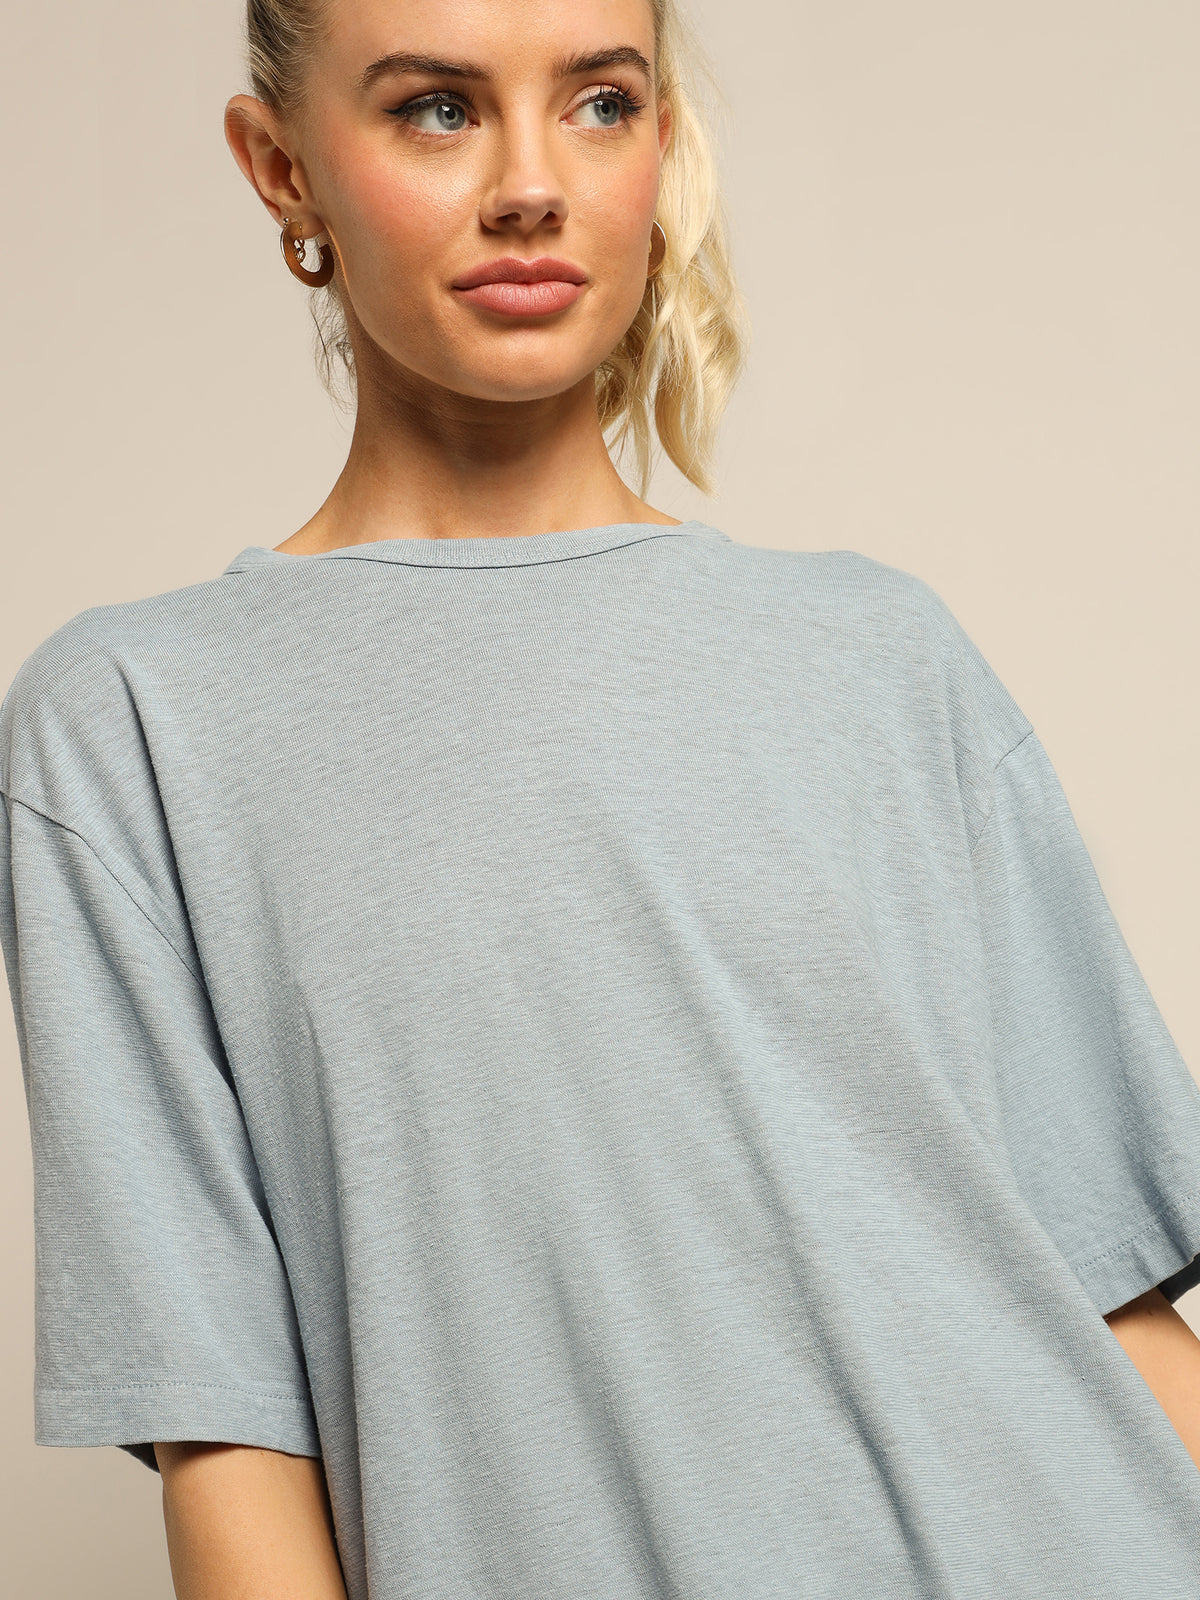 Hemp Box T-Shirt in Steel Blue